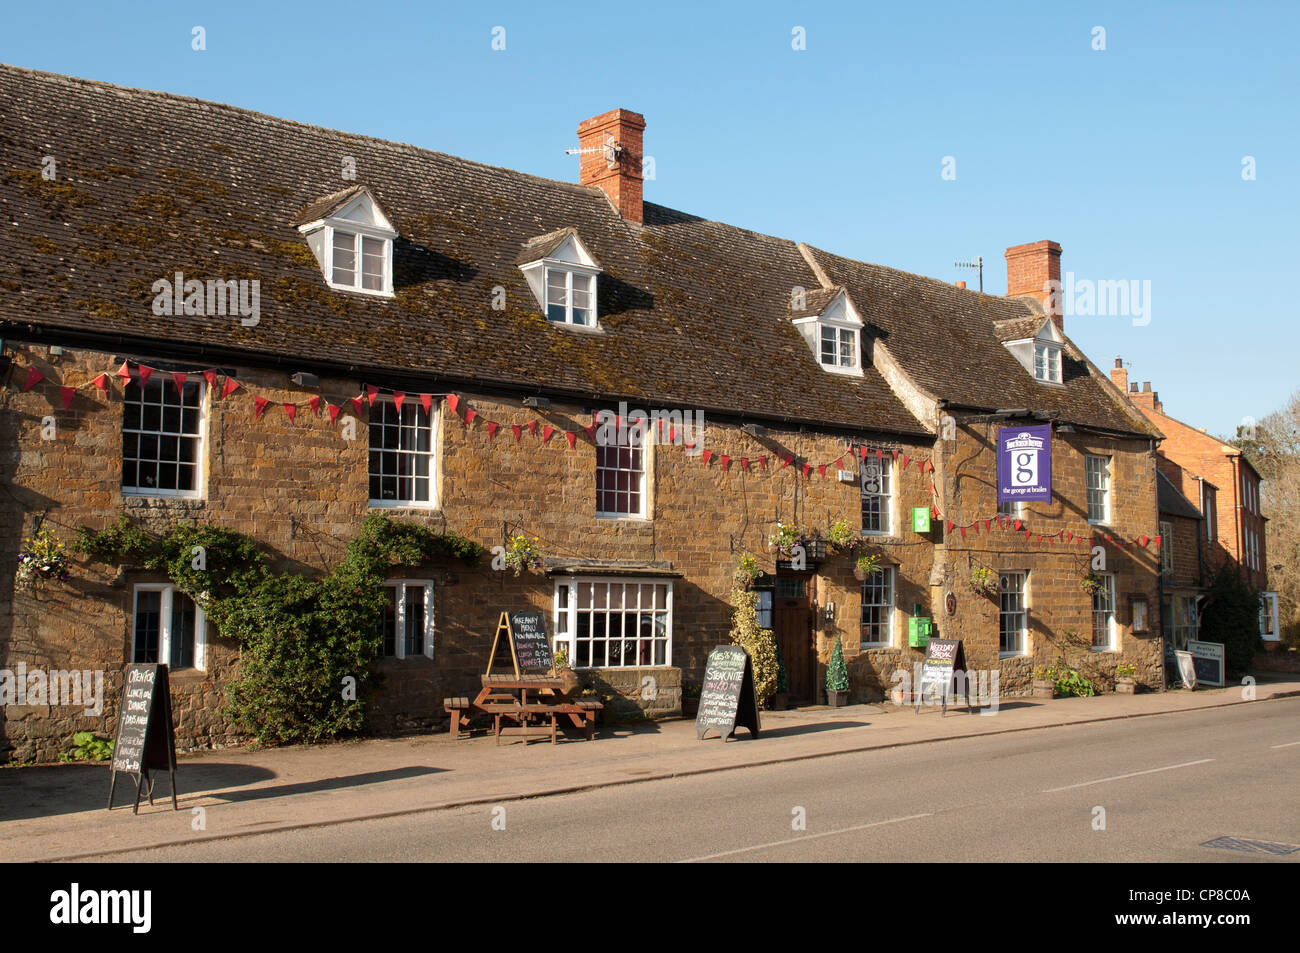 The George pub, Brailes, Warwickshire, England, UK Stock Photo